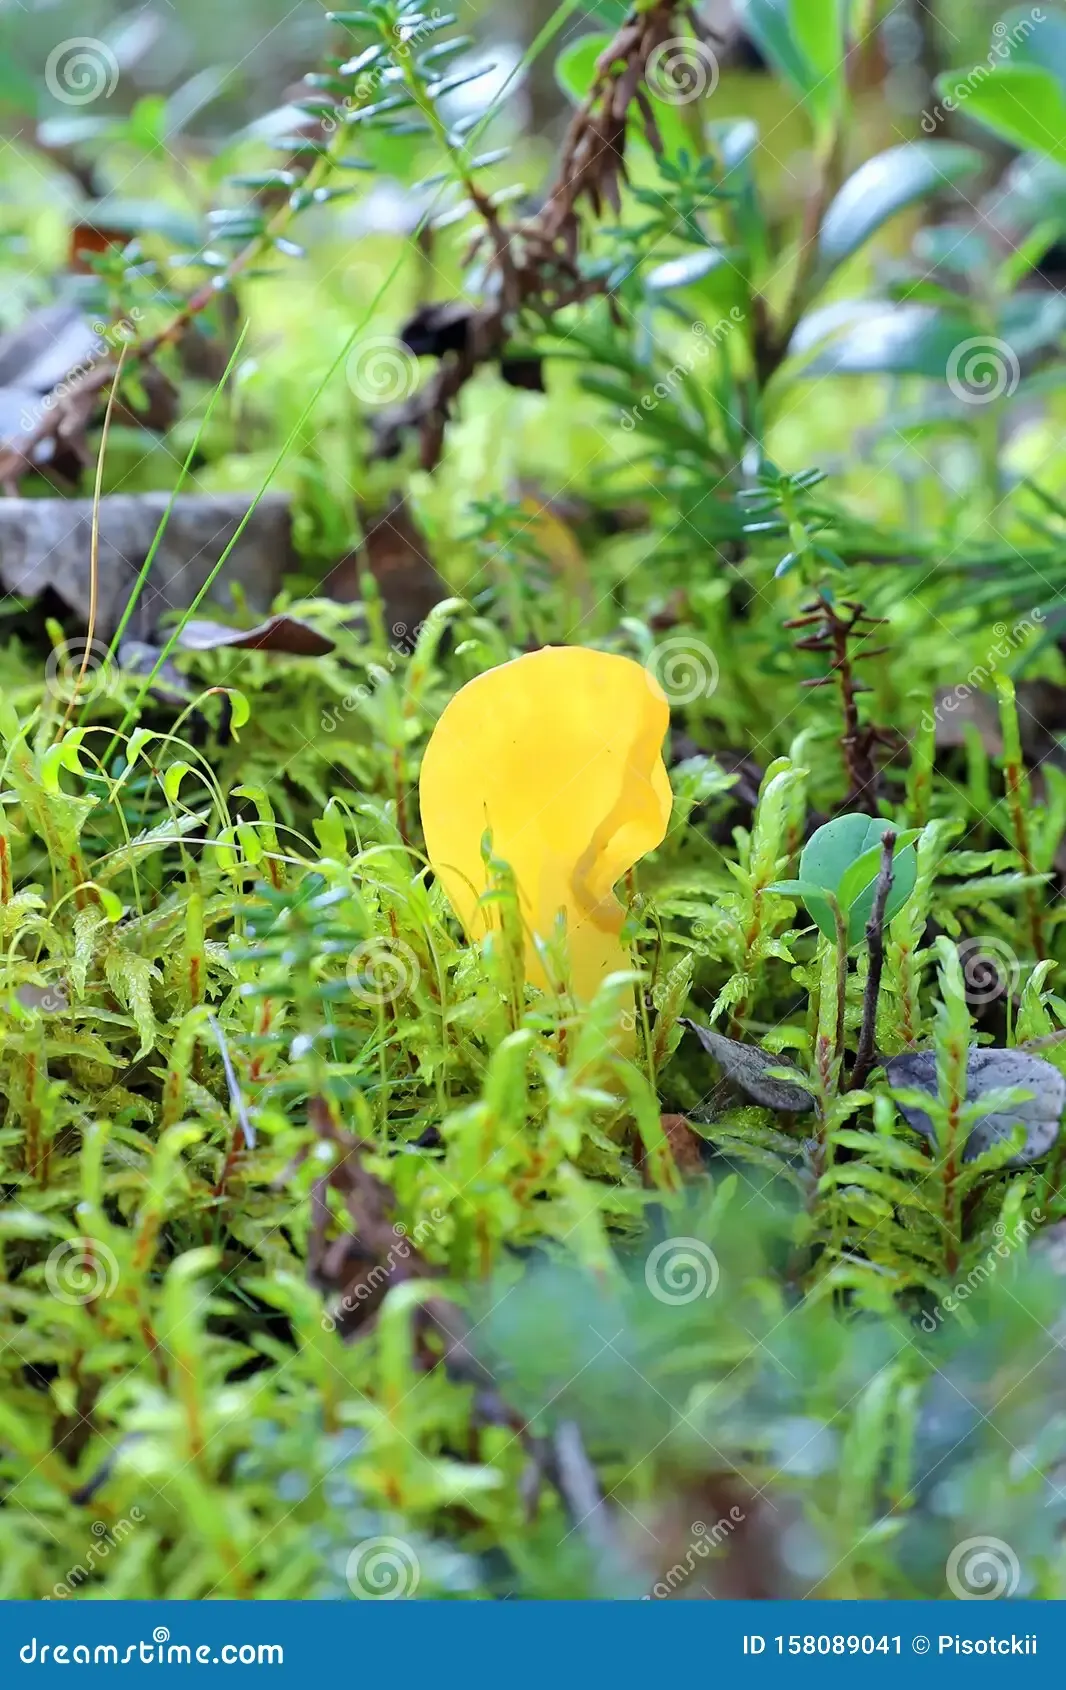 spathularia-flavida-specularia-yellowish-fungus-moss-mushroom-siberian-forest-158089041.jpg